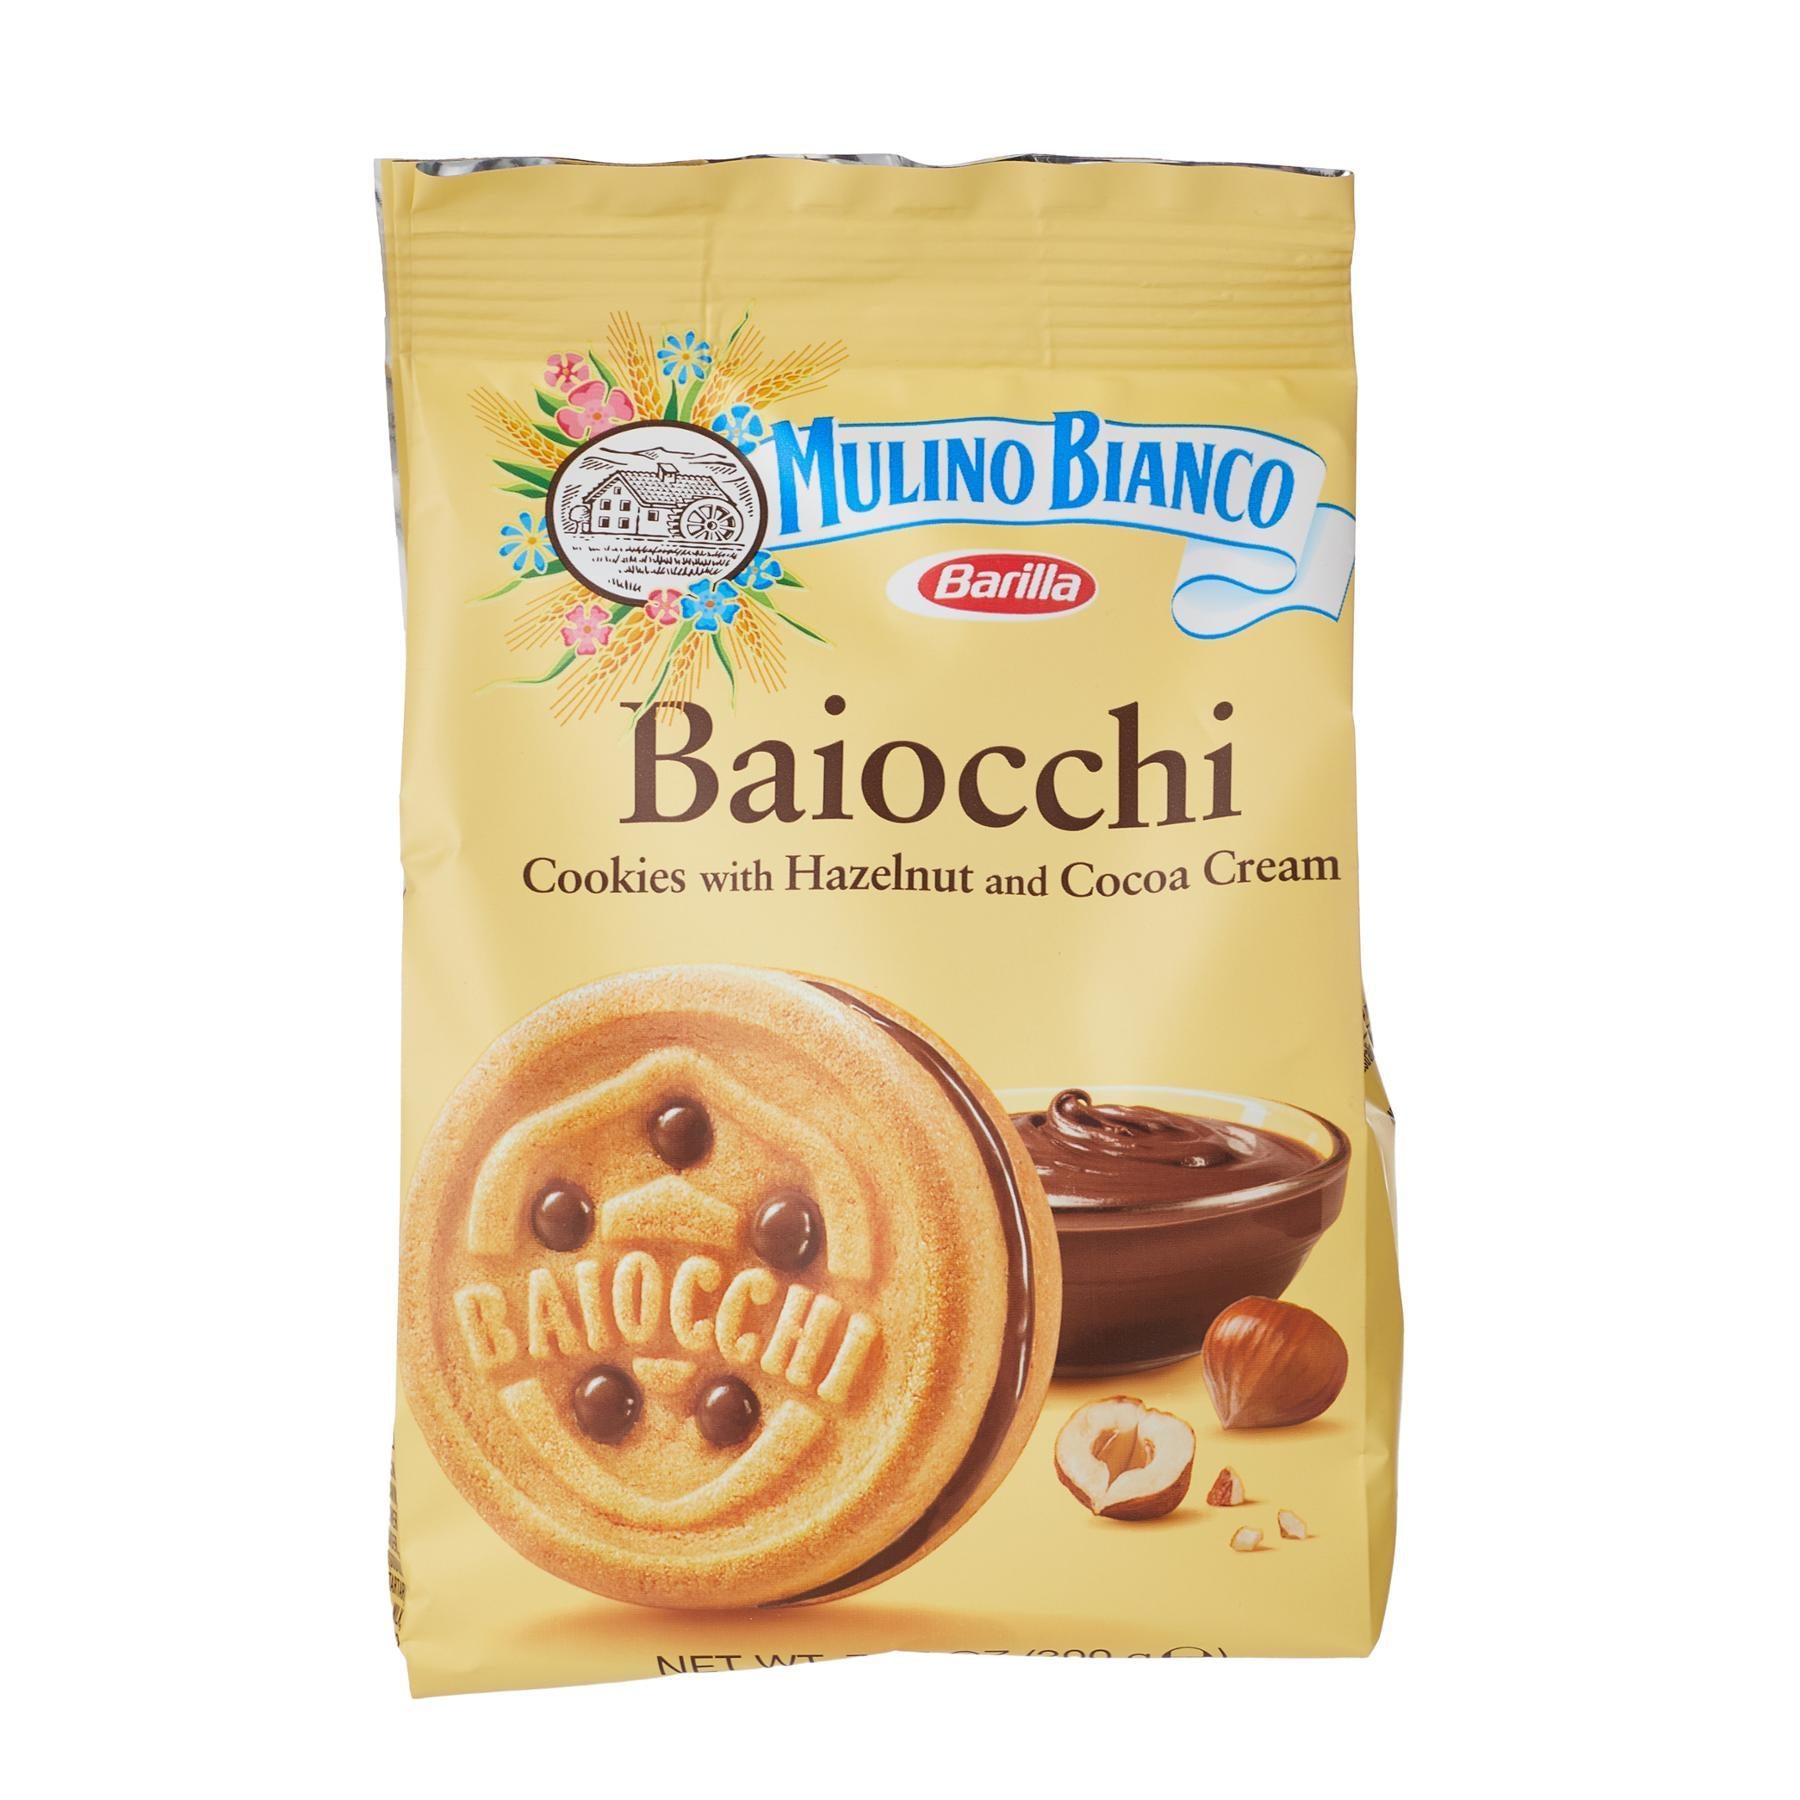 Baiocchi Italian Breakfast Biscuits